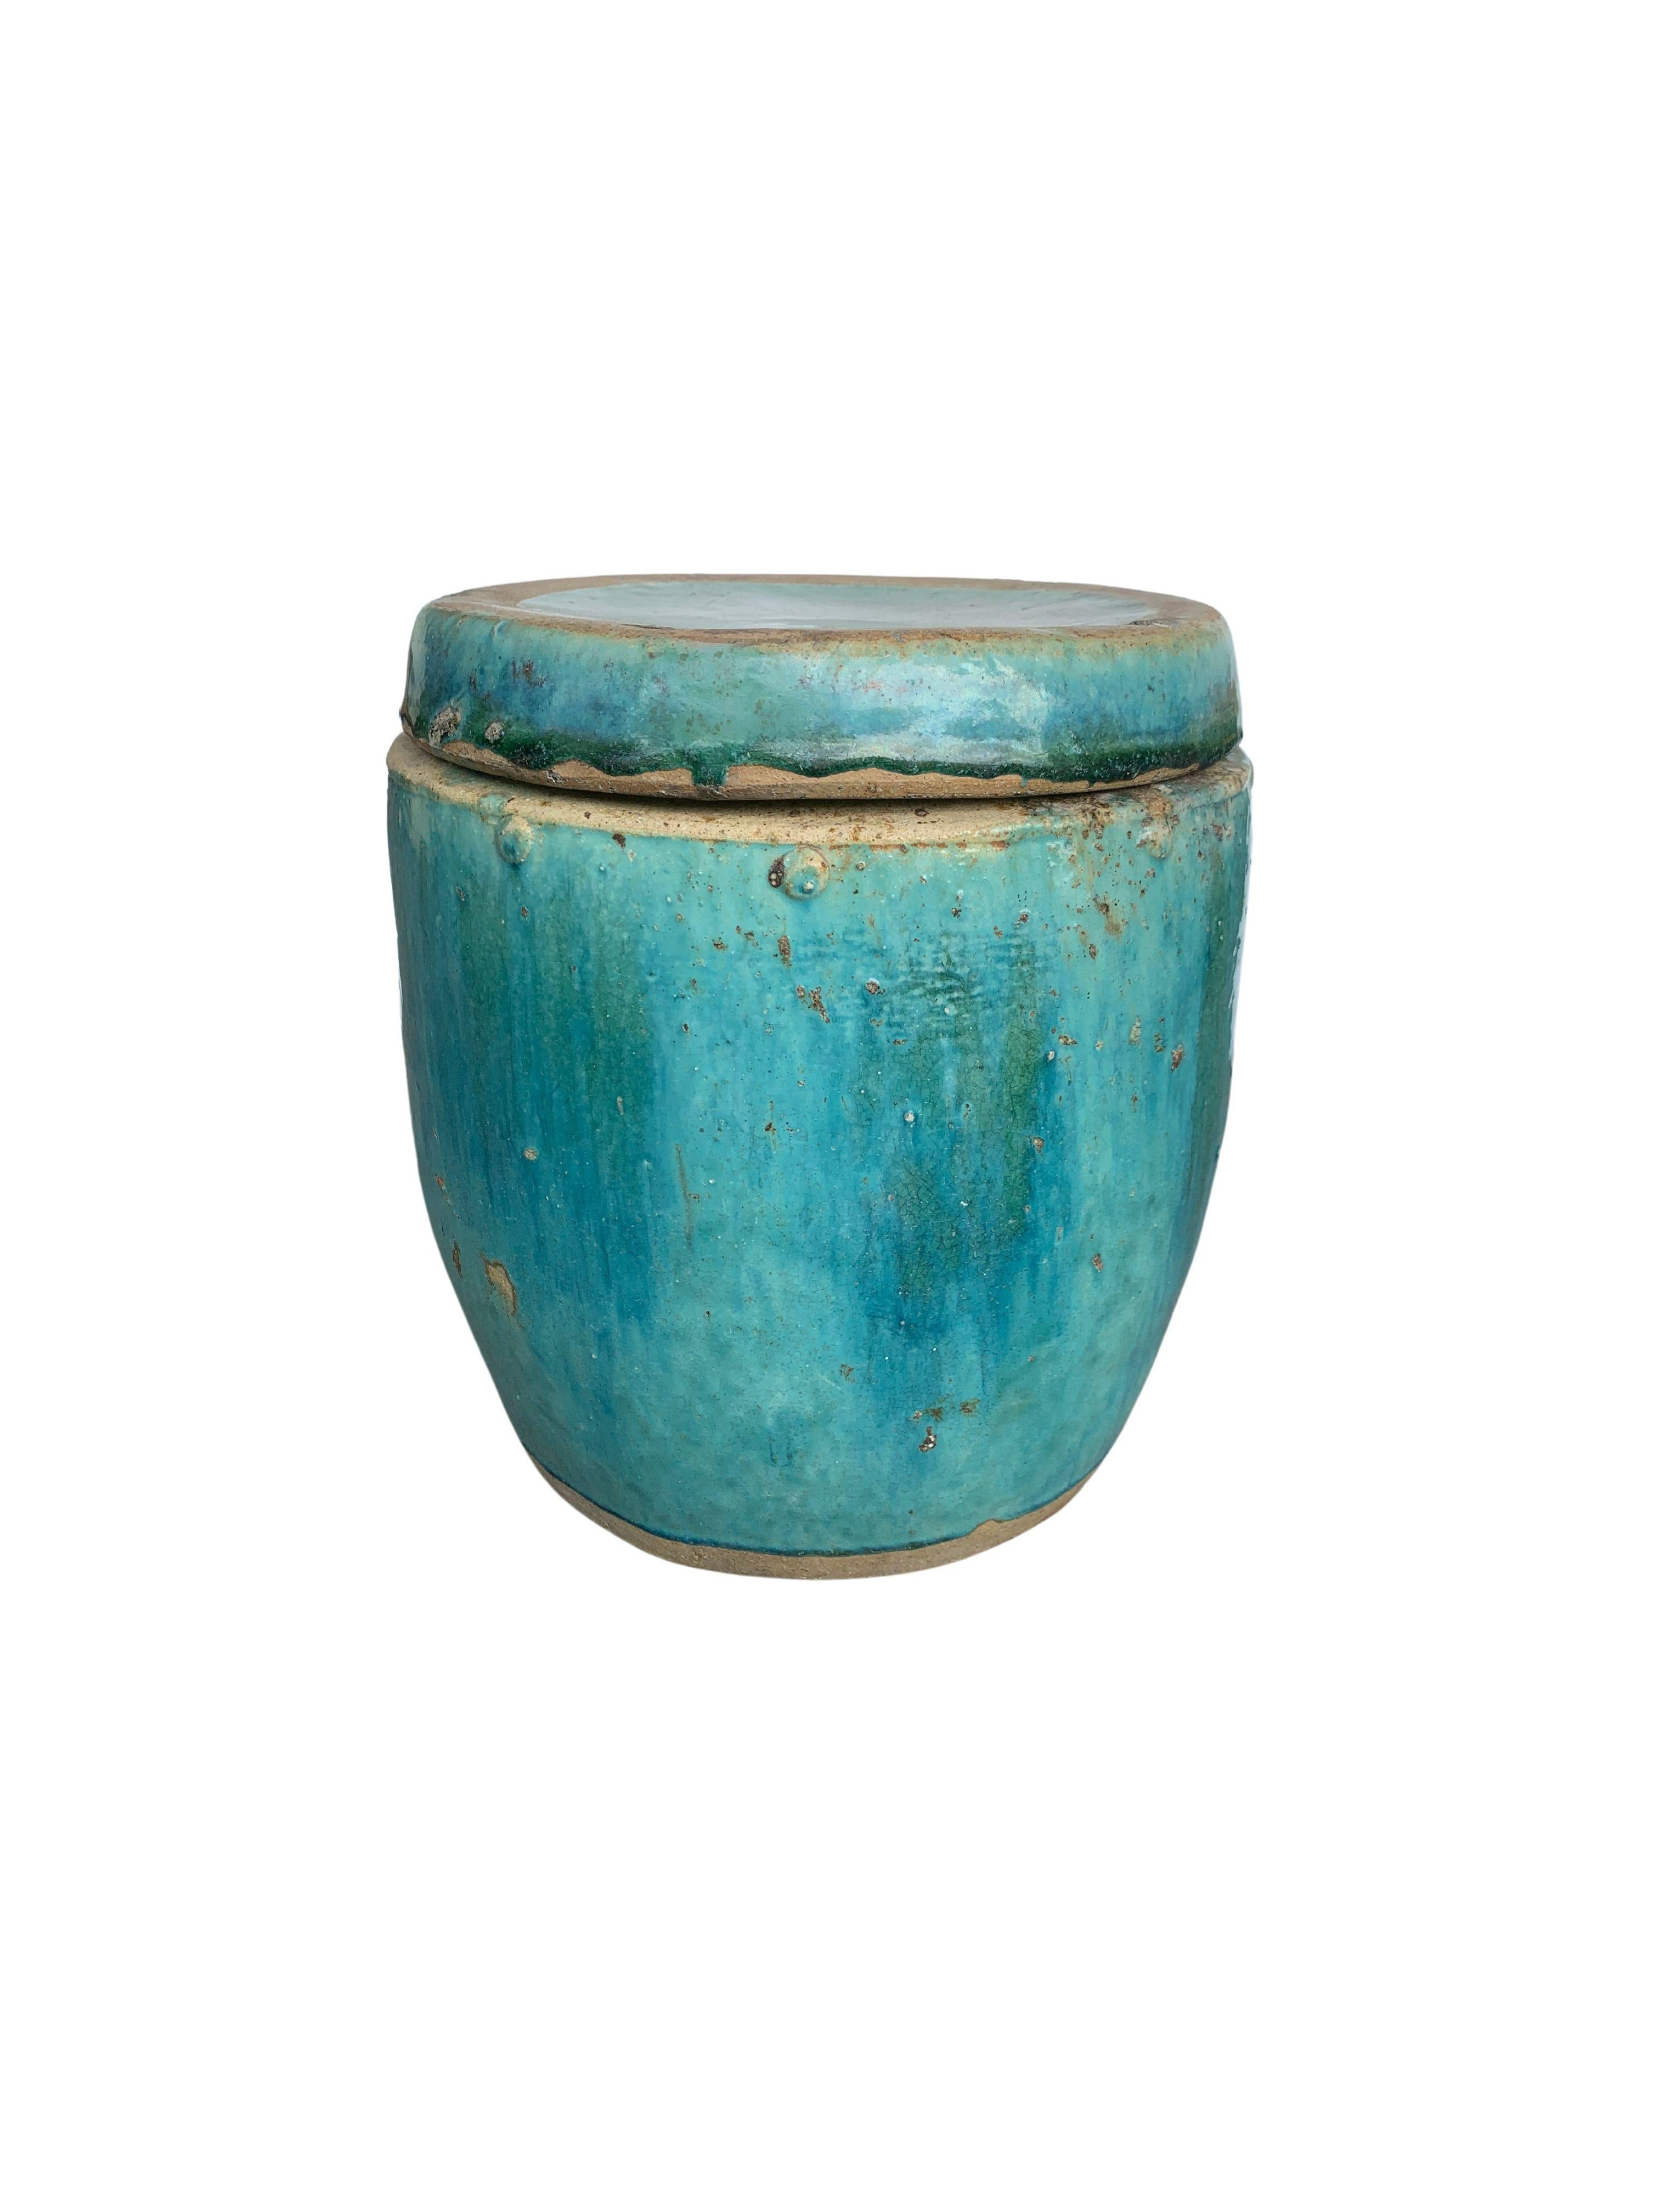 Chinese Shiwan Glazed Ceramic Jar / Planter, c. 1900 For Sale 1